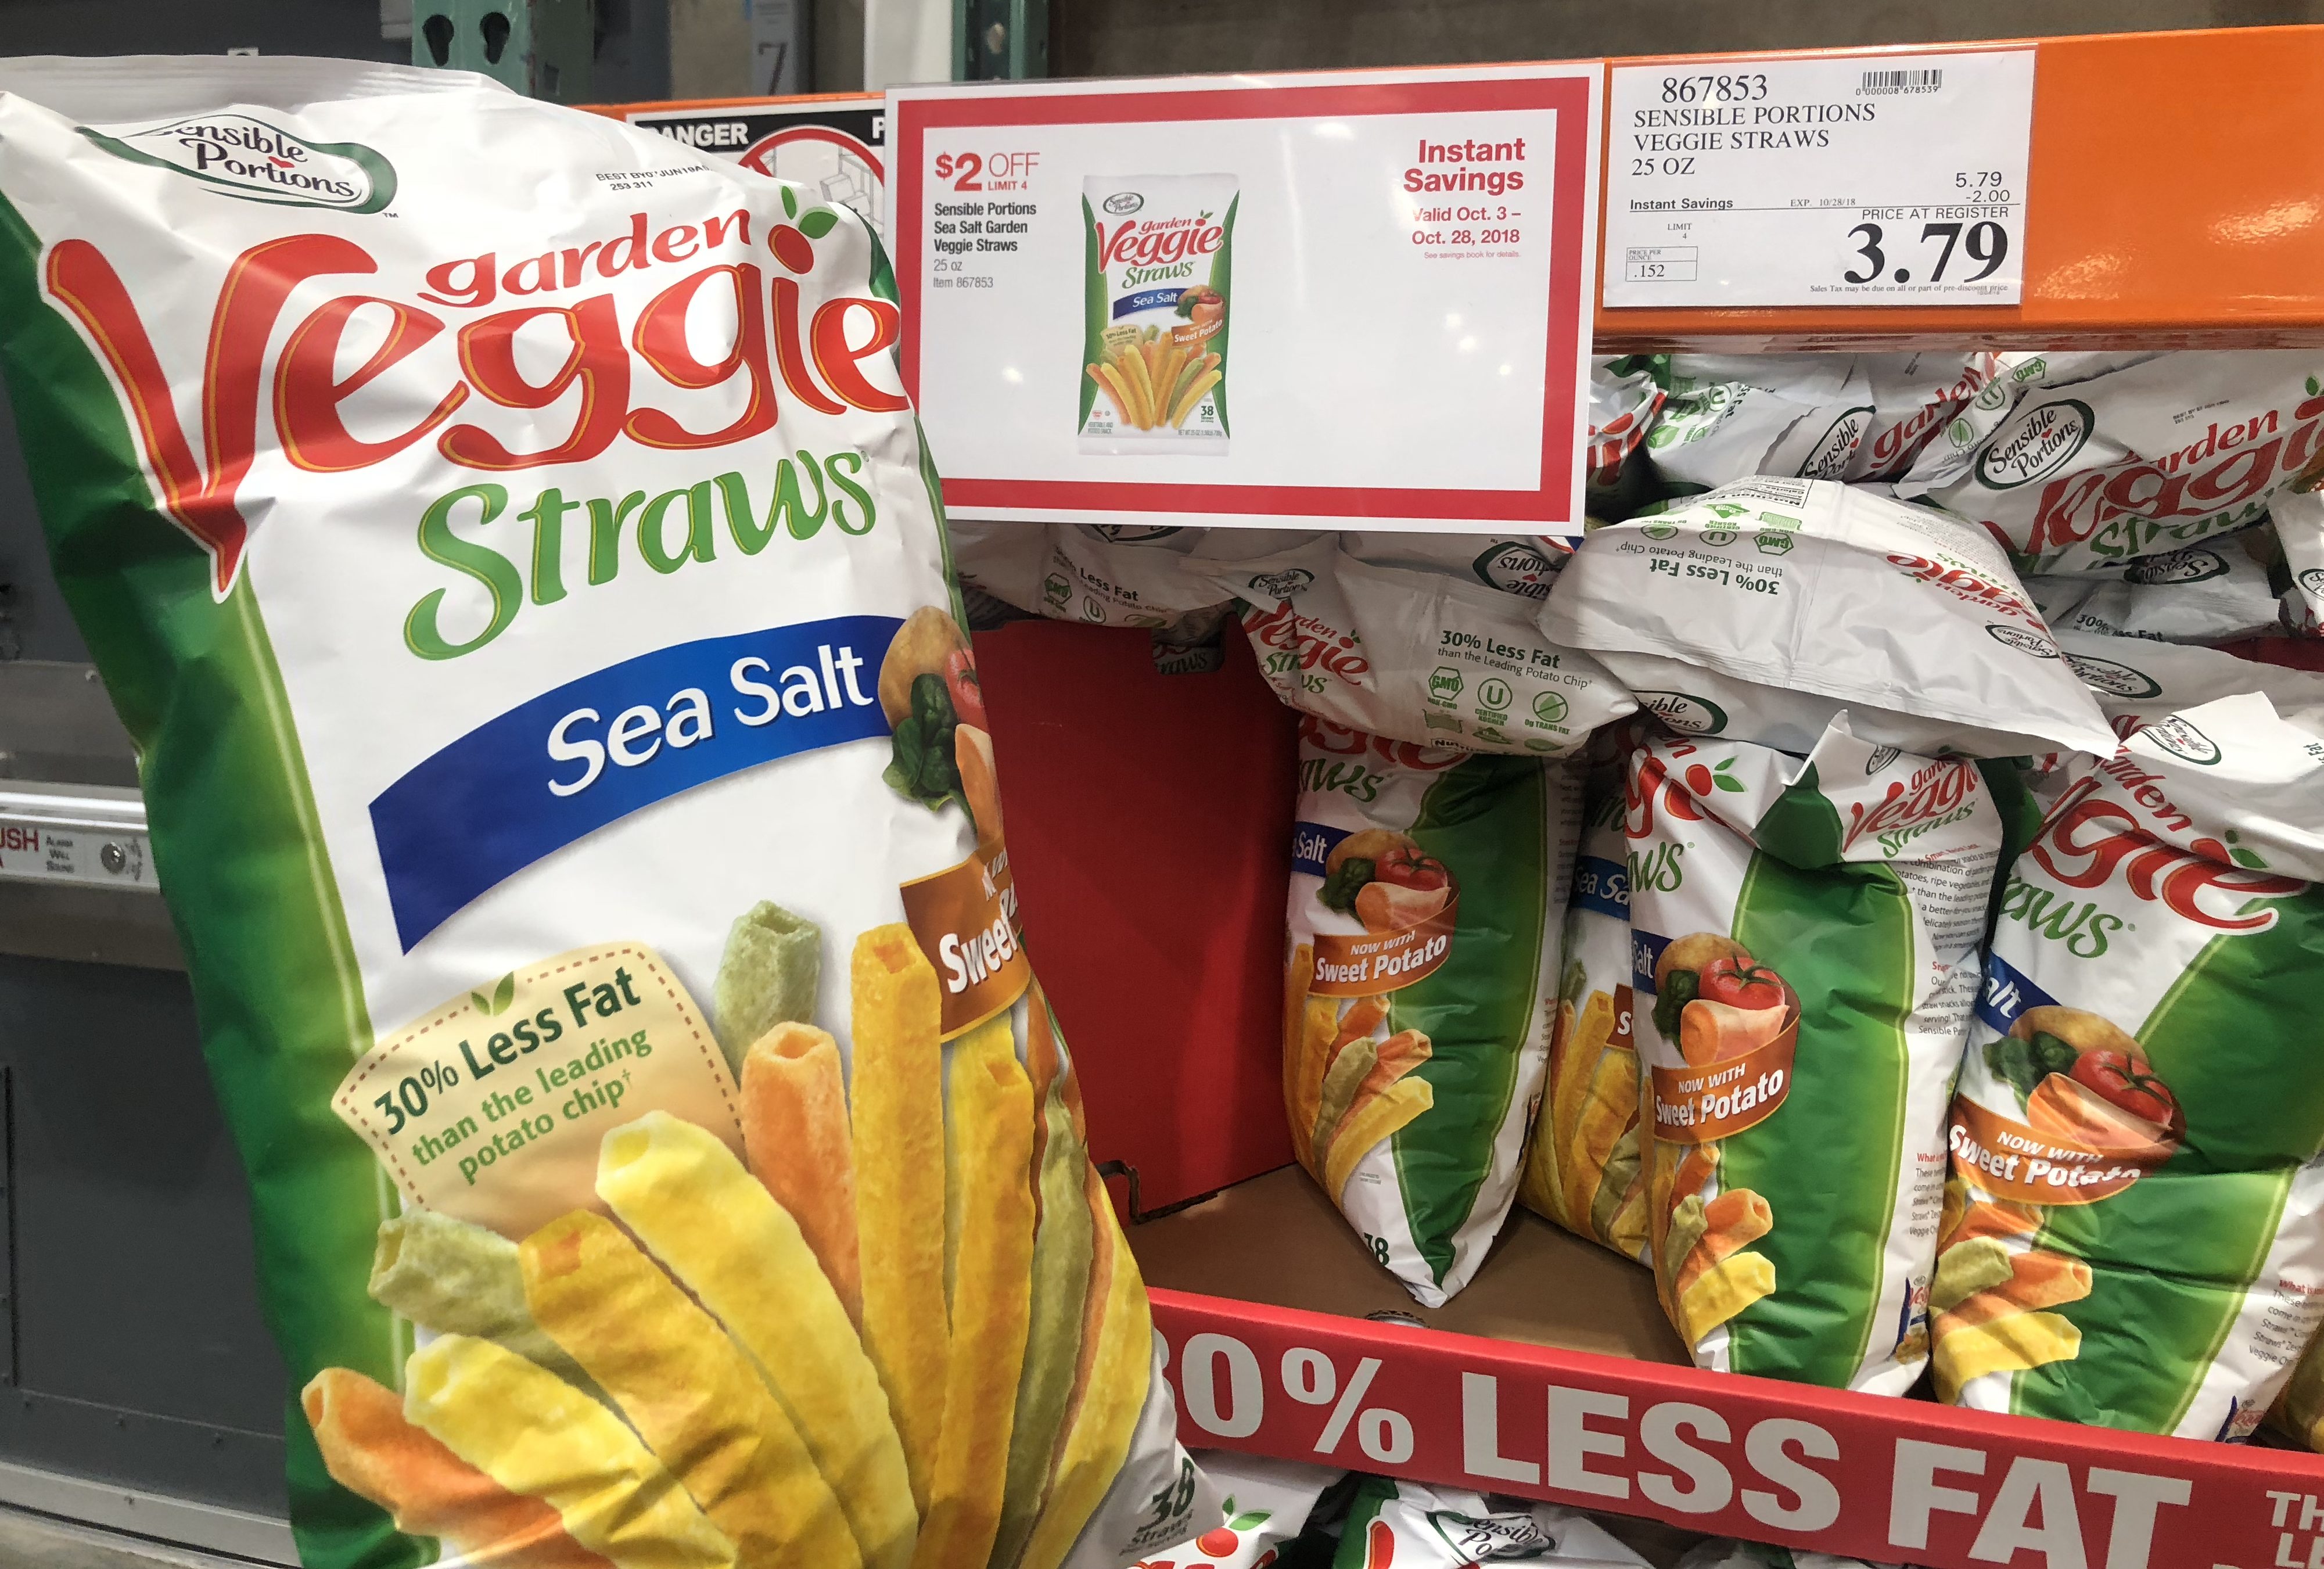 Costco deals October 2018 – Garden veggie straws at Costco